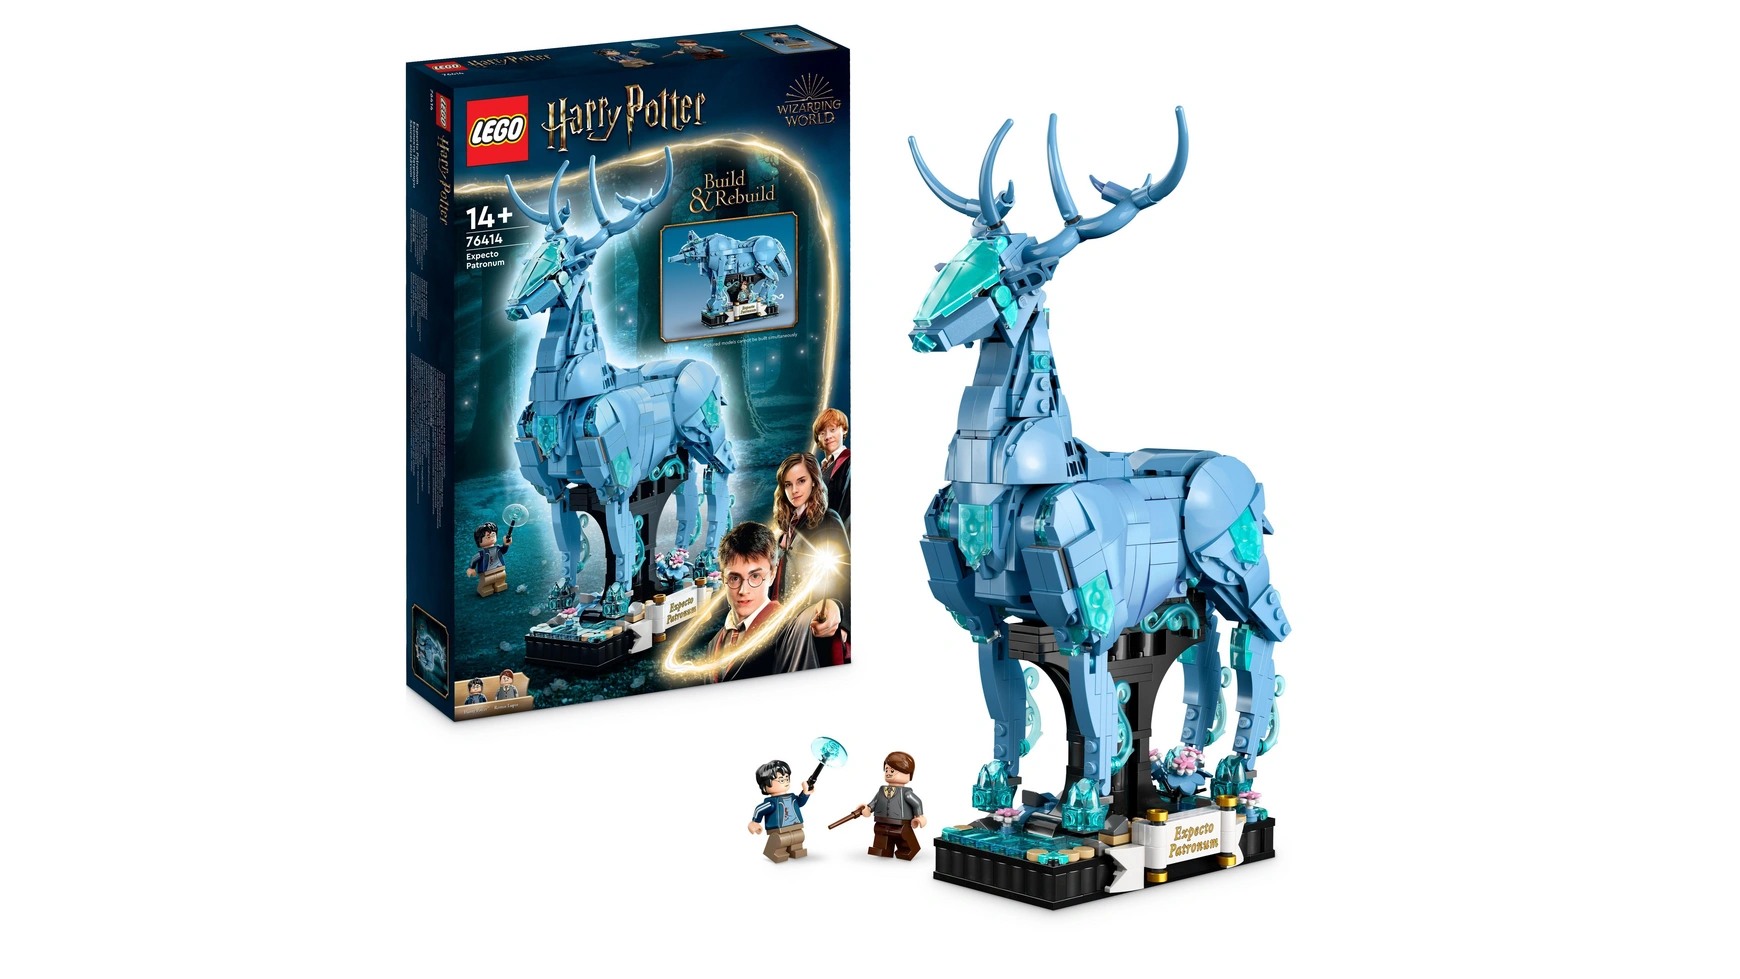 Lego Harry Potter Экспекто Патронум 3d постер harry potter expecto patronum